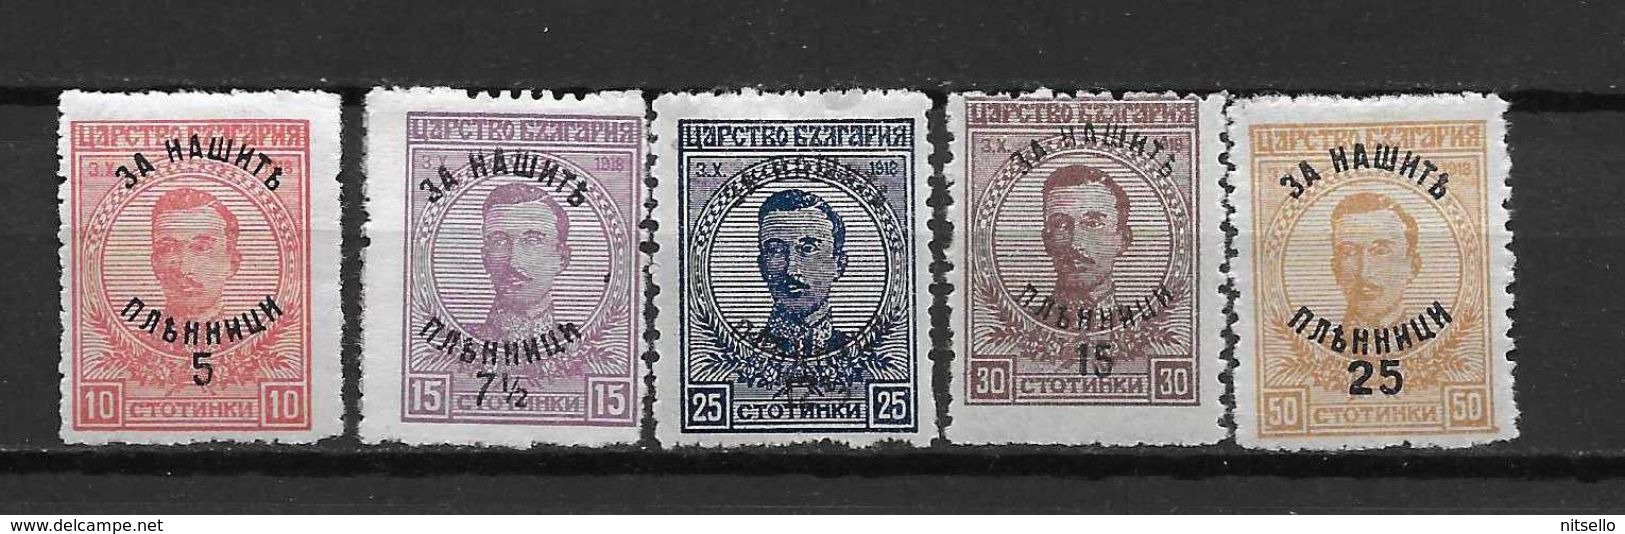 LOTE 1419  ///  BULGARIA 1919       YVERT Nº: 134/138 *MH   //    CATALOG./COTE:            ¡¡¡LIQUIDATION!!! - Used Stamps